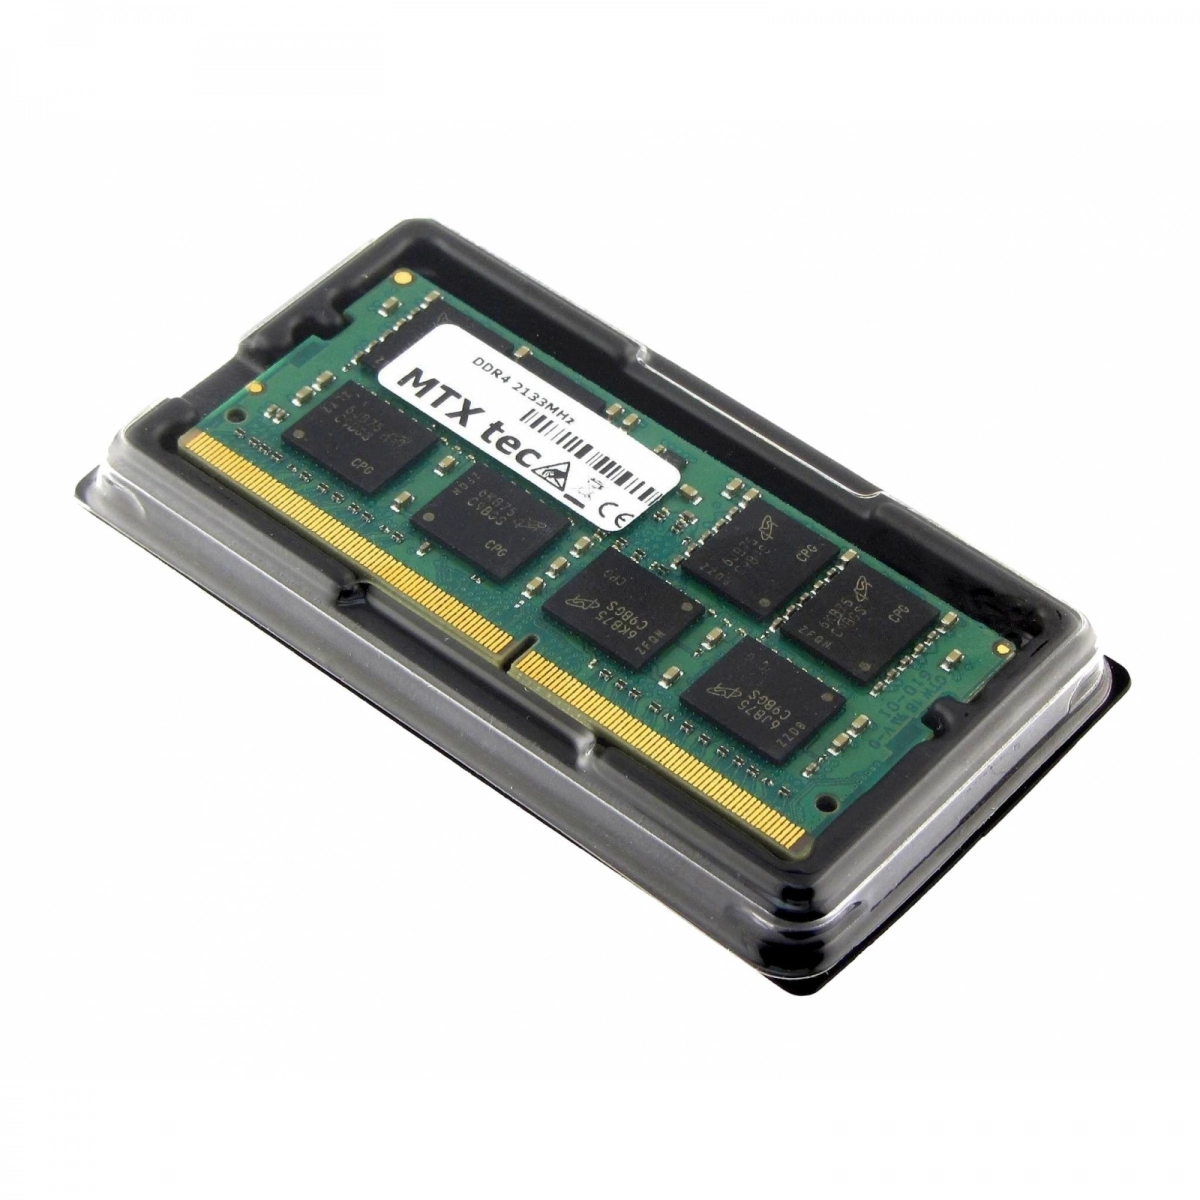 MTXtec Arbeitsspeicher 16 GB RAM für LENOVO ThinkPad P50